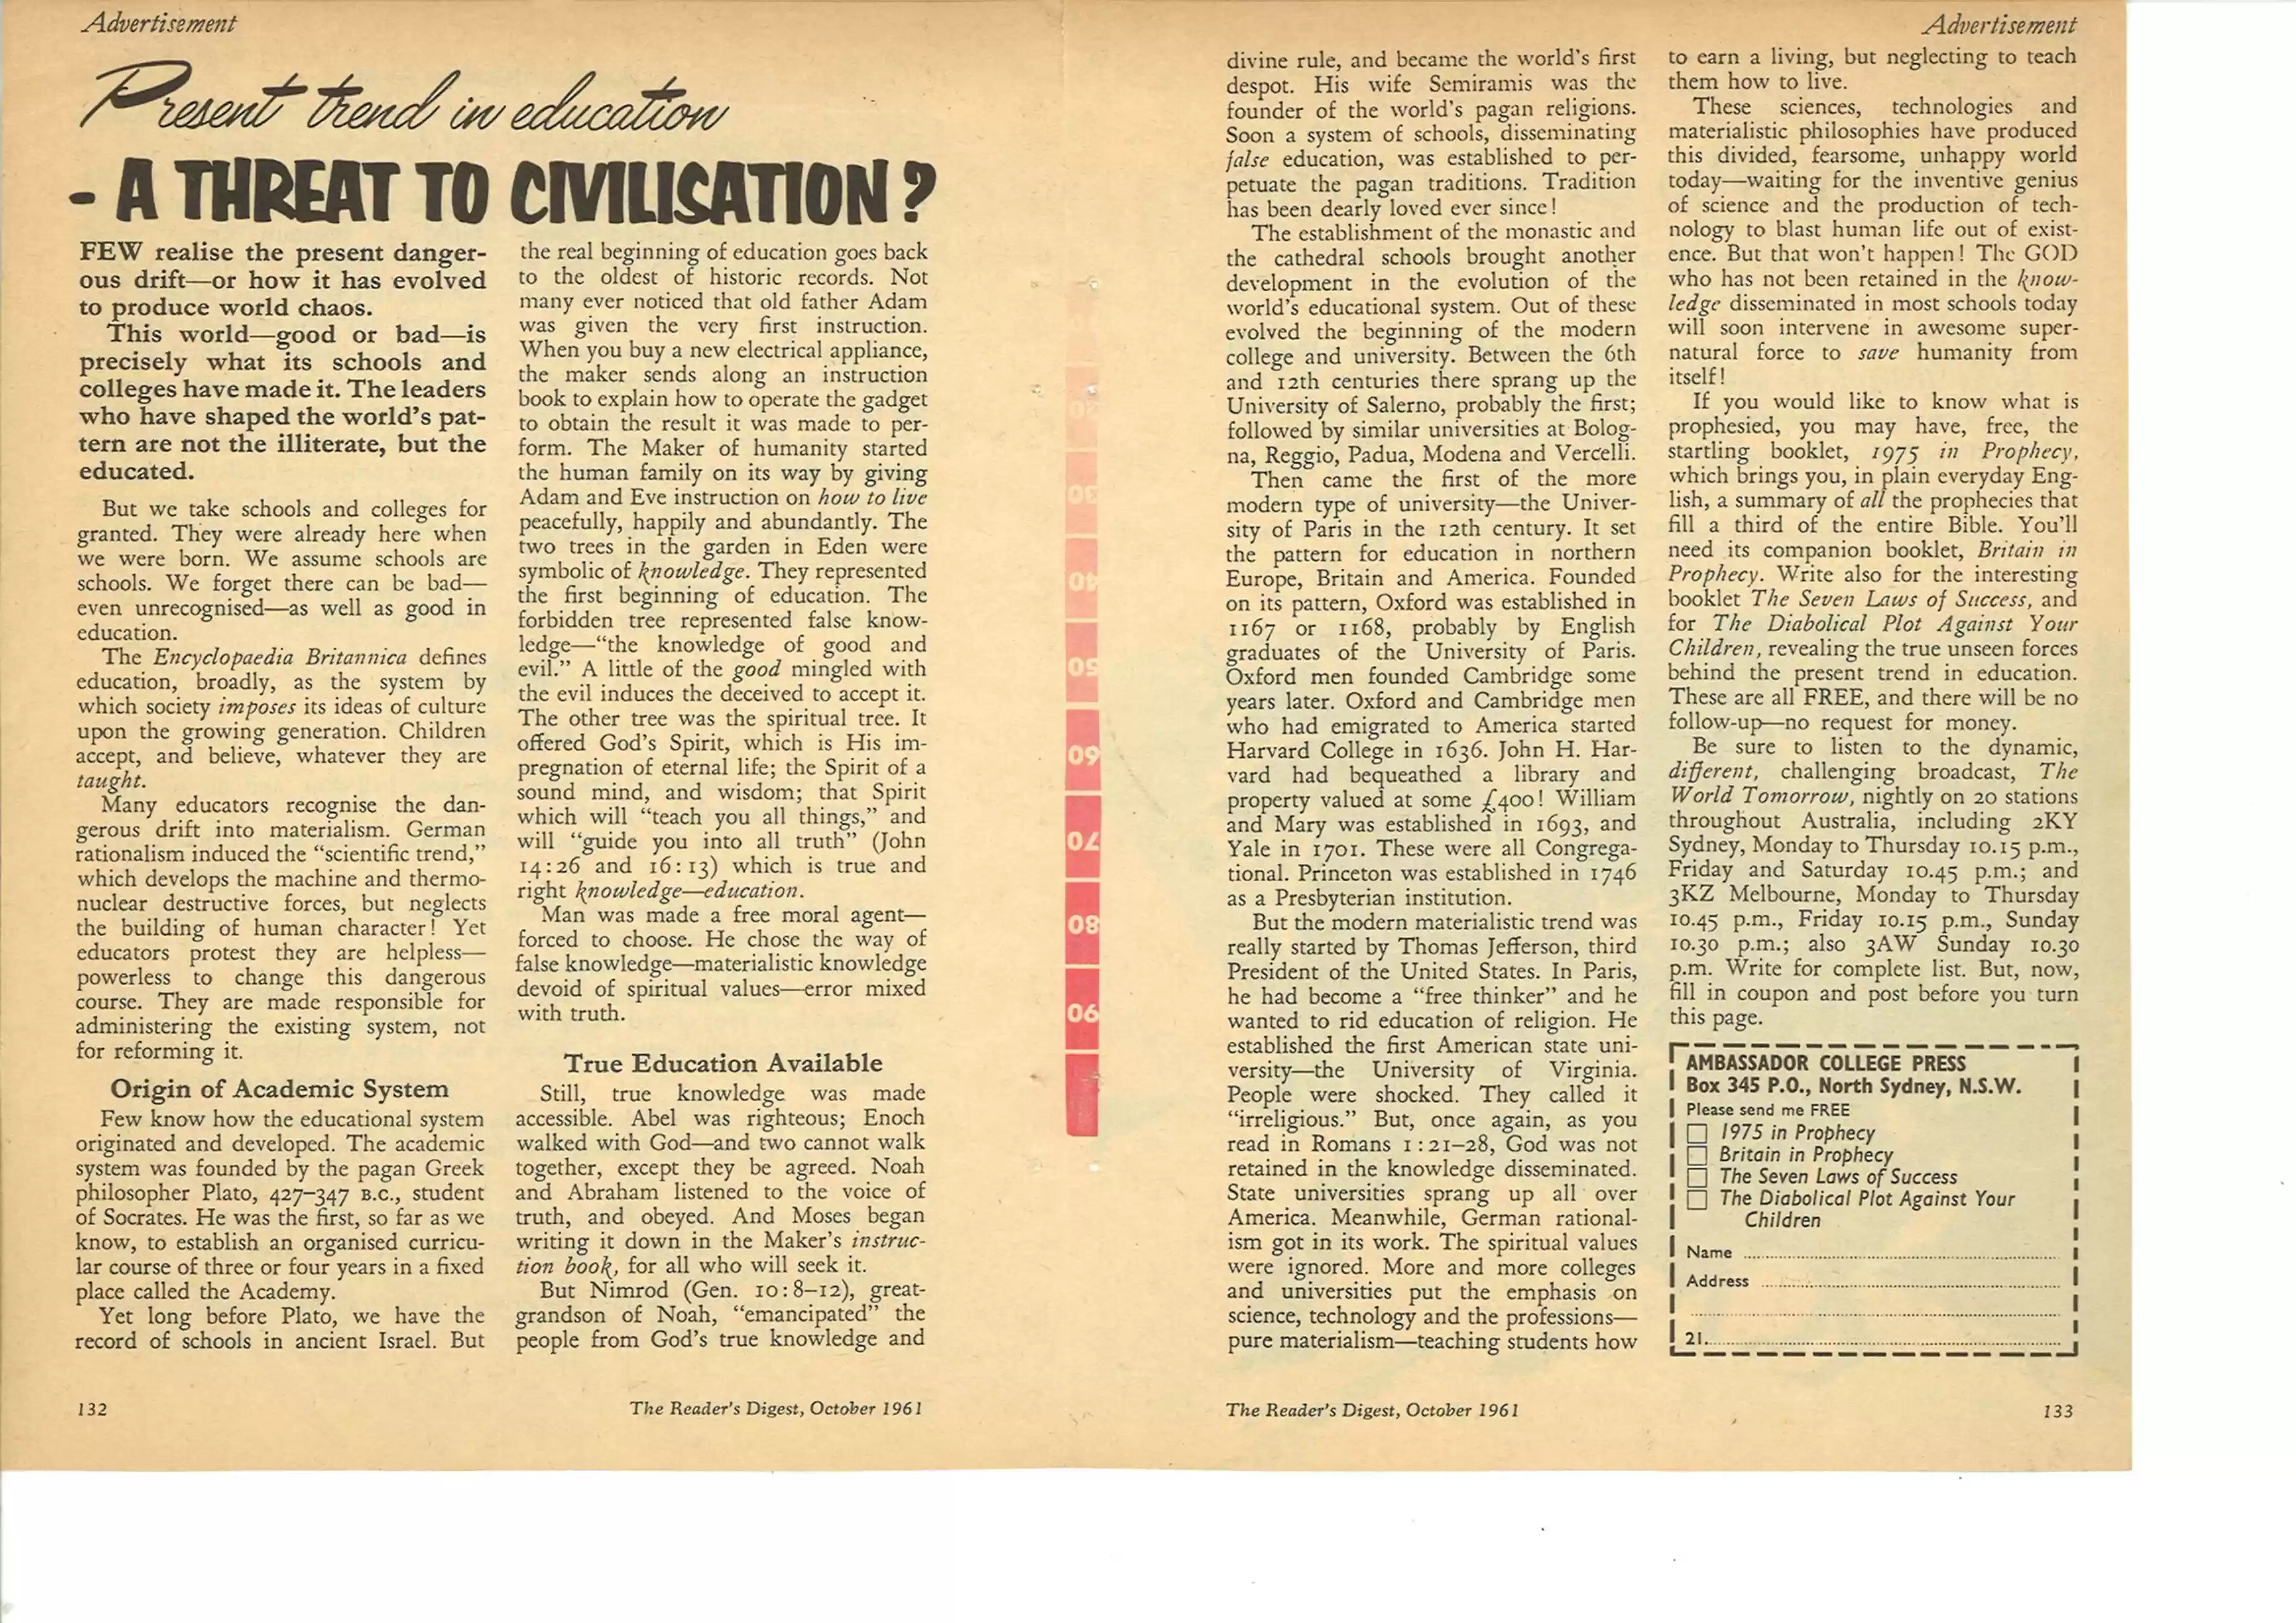 1961 Readers Digest Advert Oct 1961